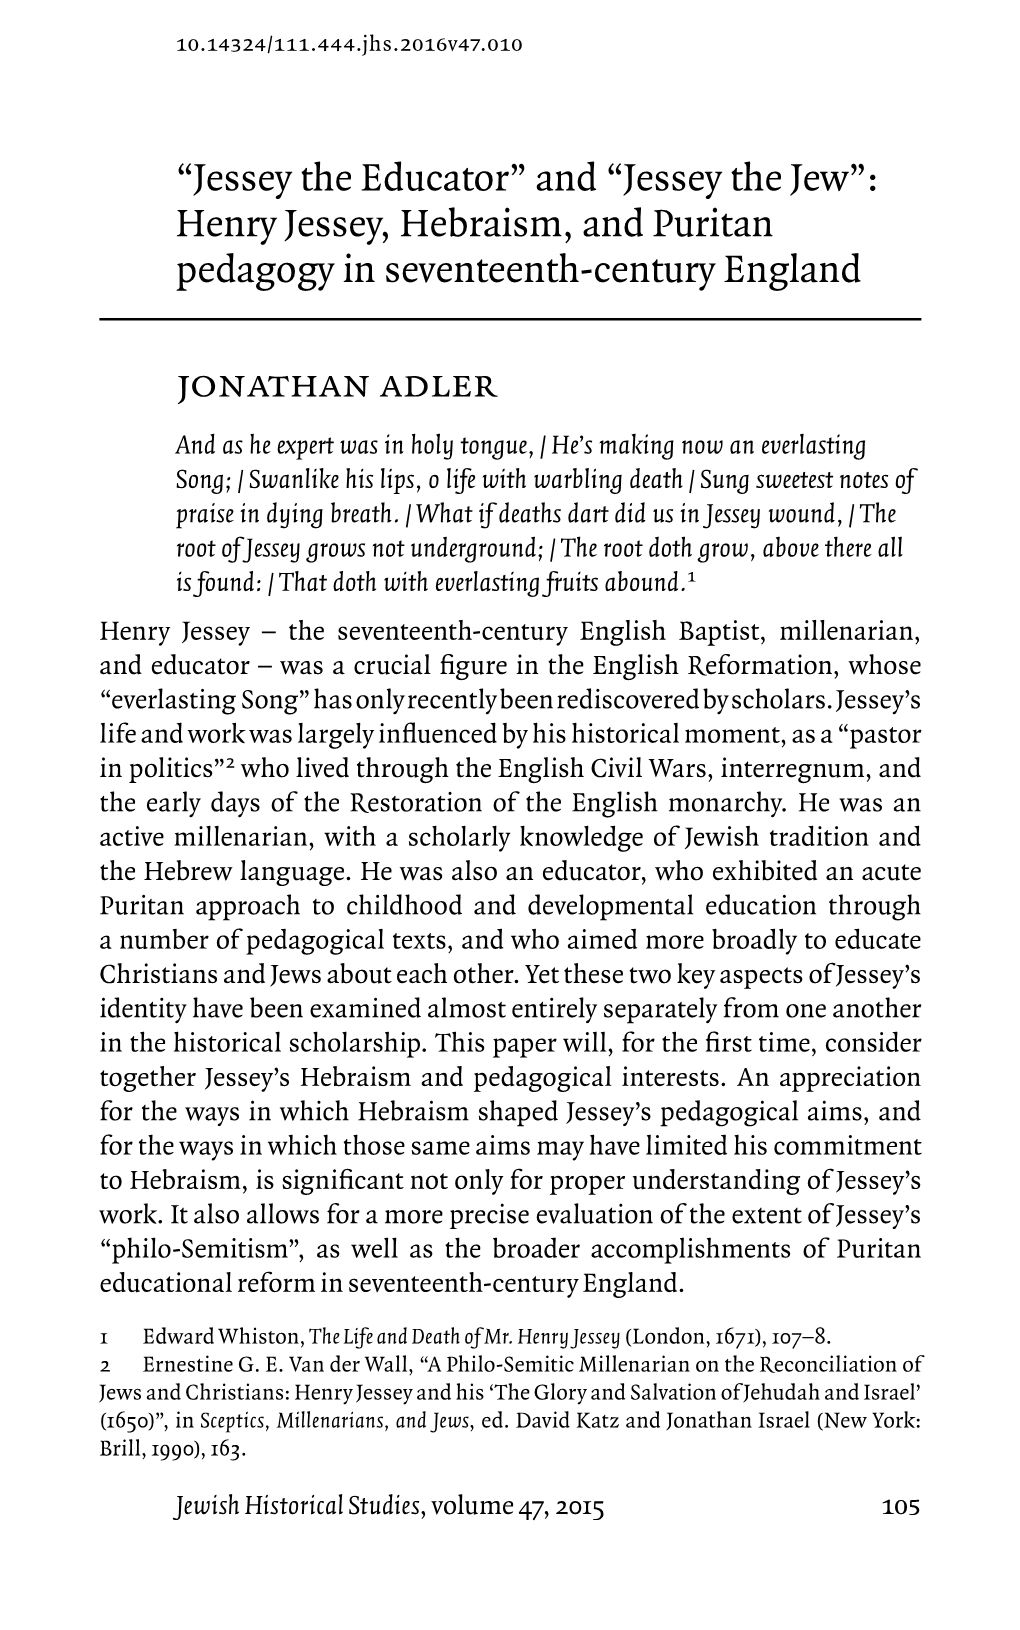 Henry Jessey, Hebraism, and Puritan Pedagogy in Seventeenth-Century England Jonathan Adler